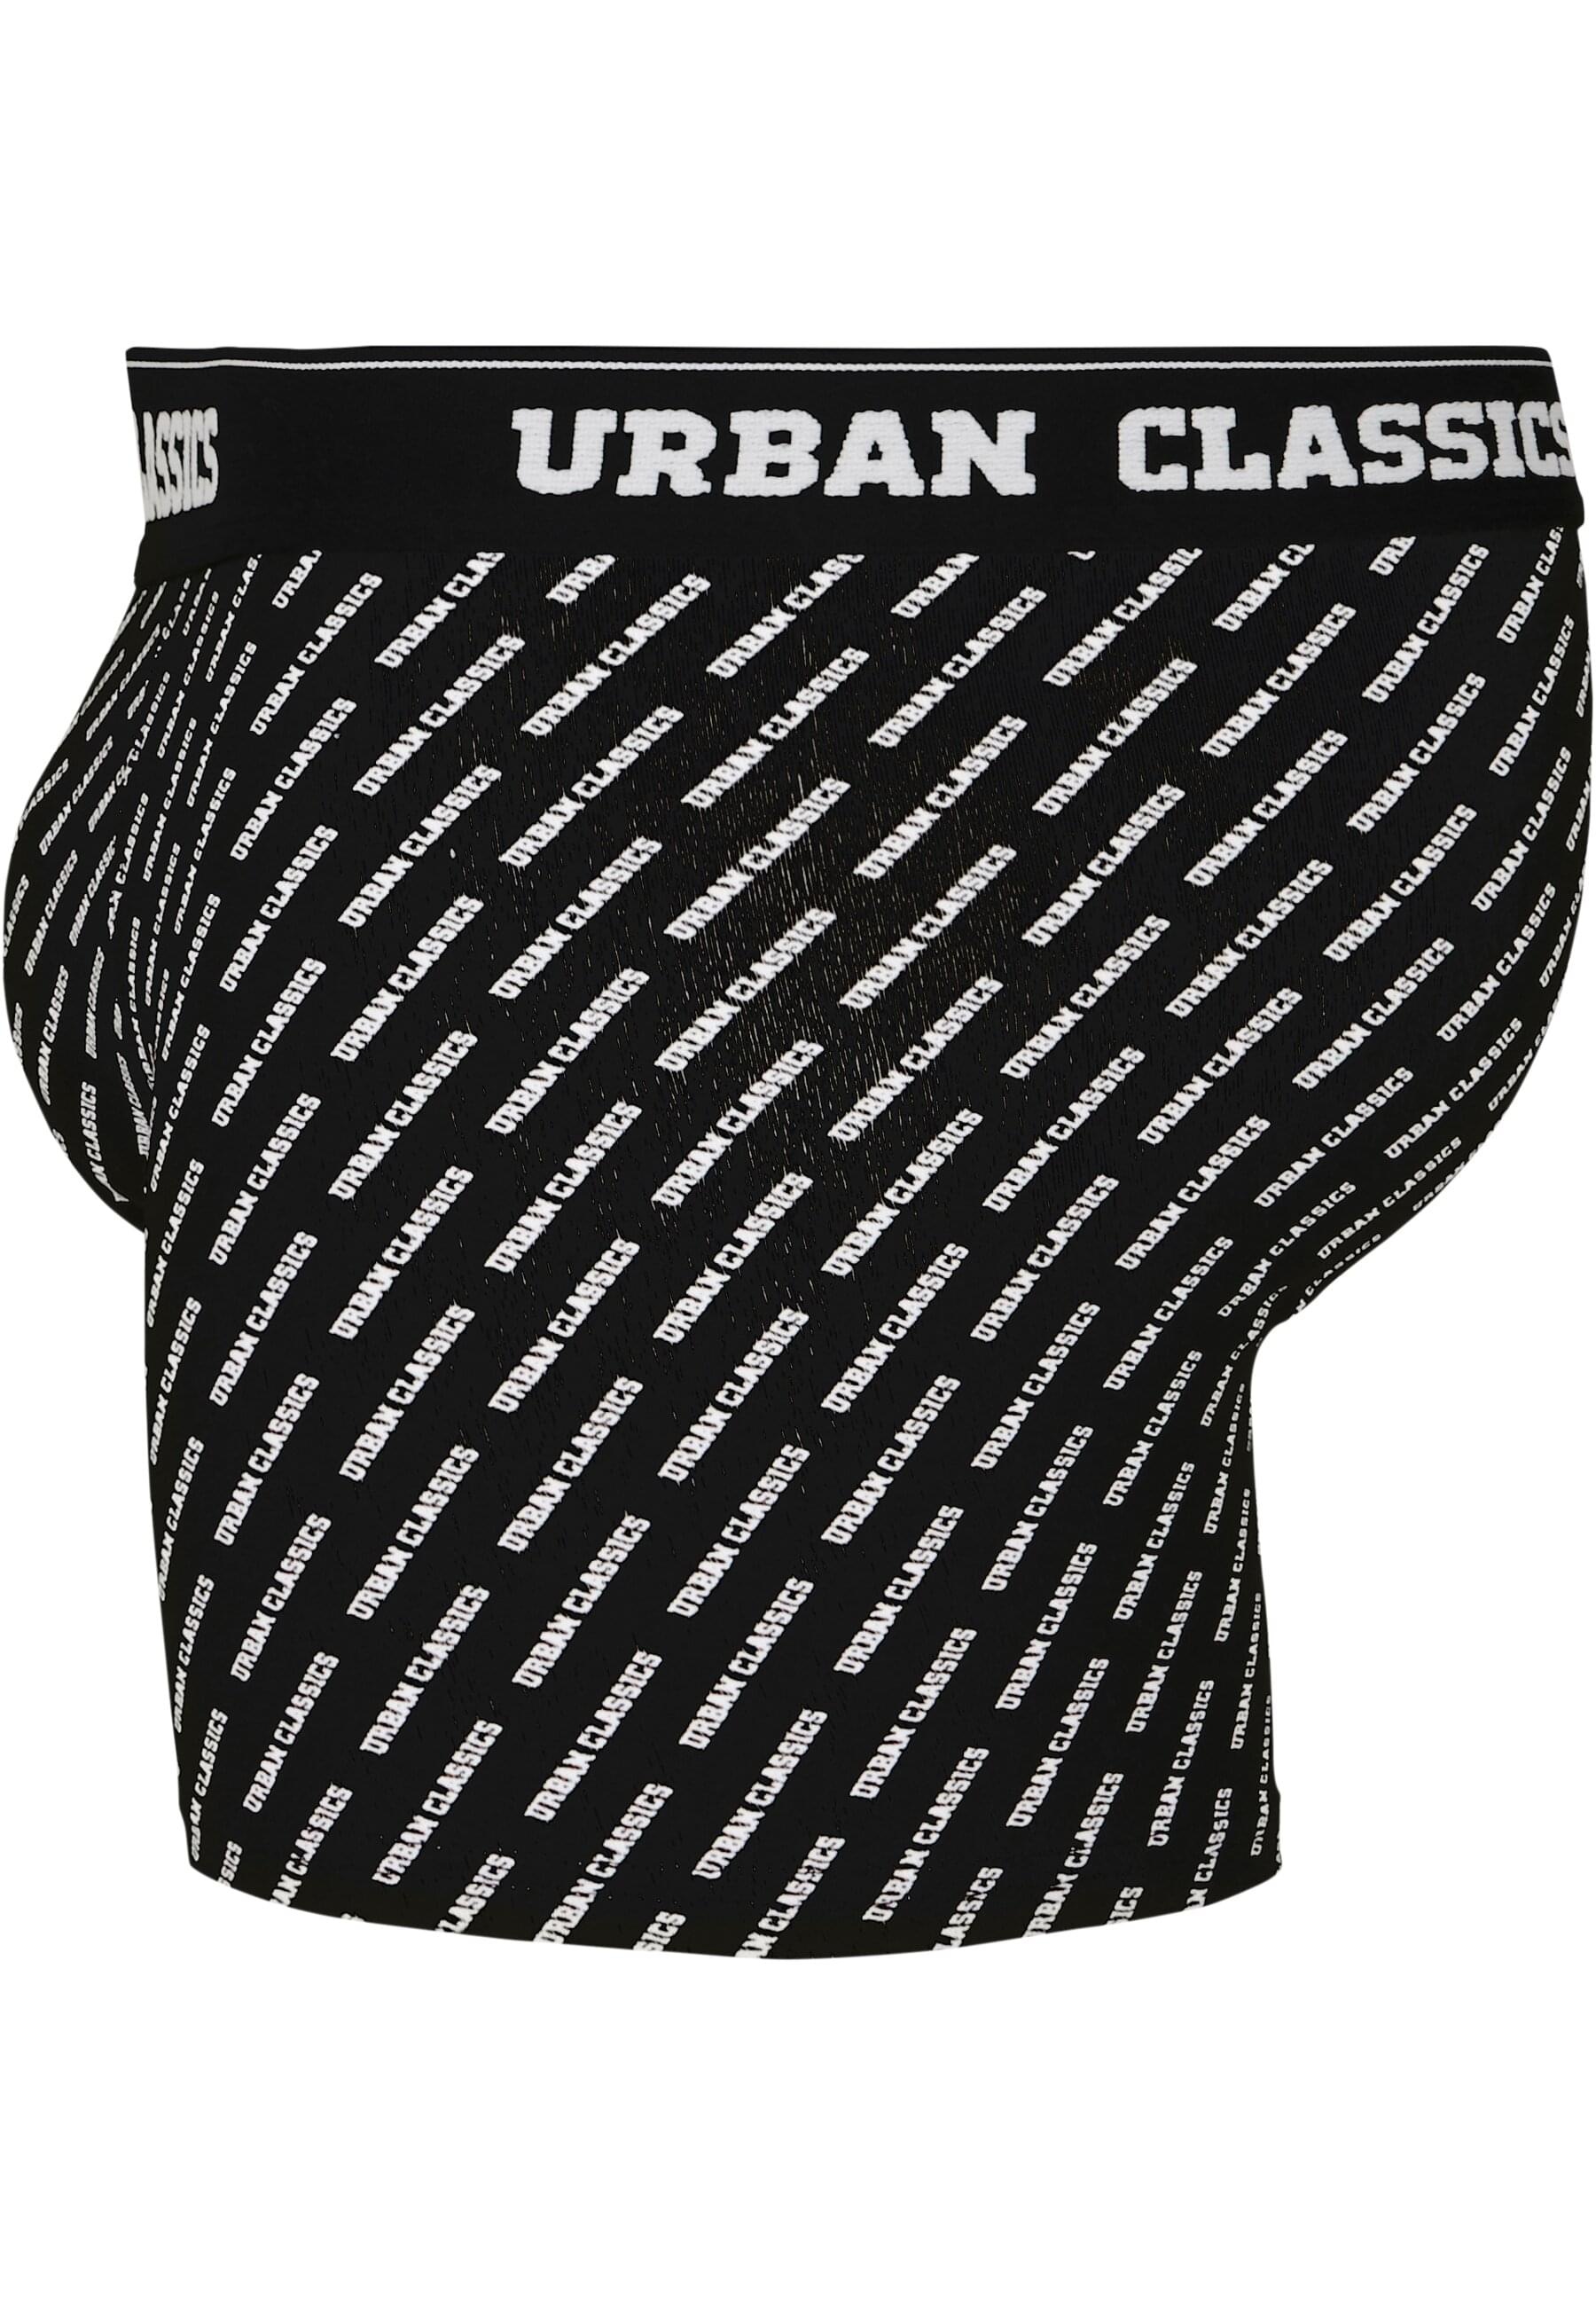 URBAN CLASSICS Boxershorts »Urban Classics Herren Boxer Shorts 3-Pack«, (1 St.)